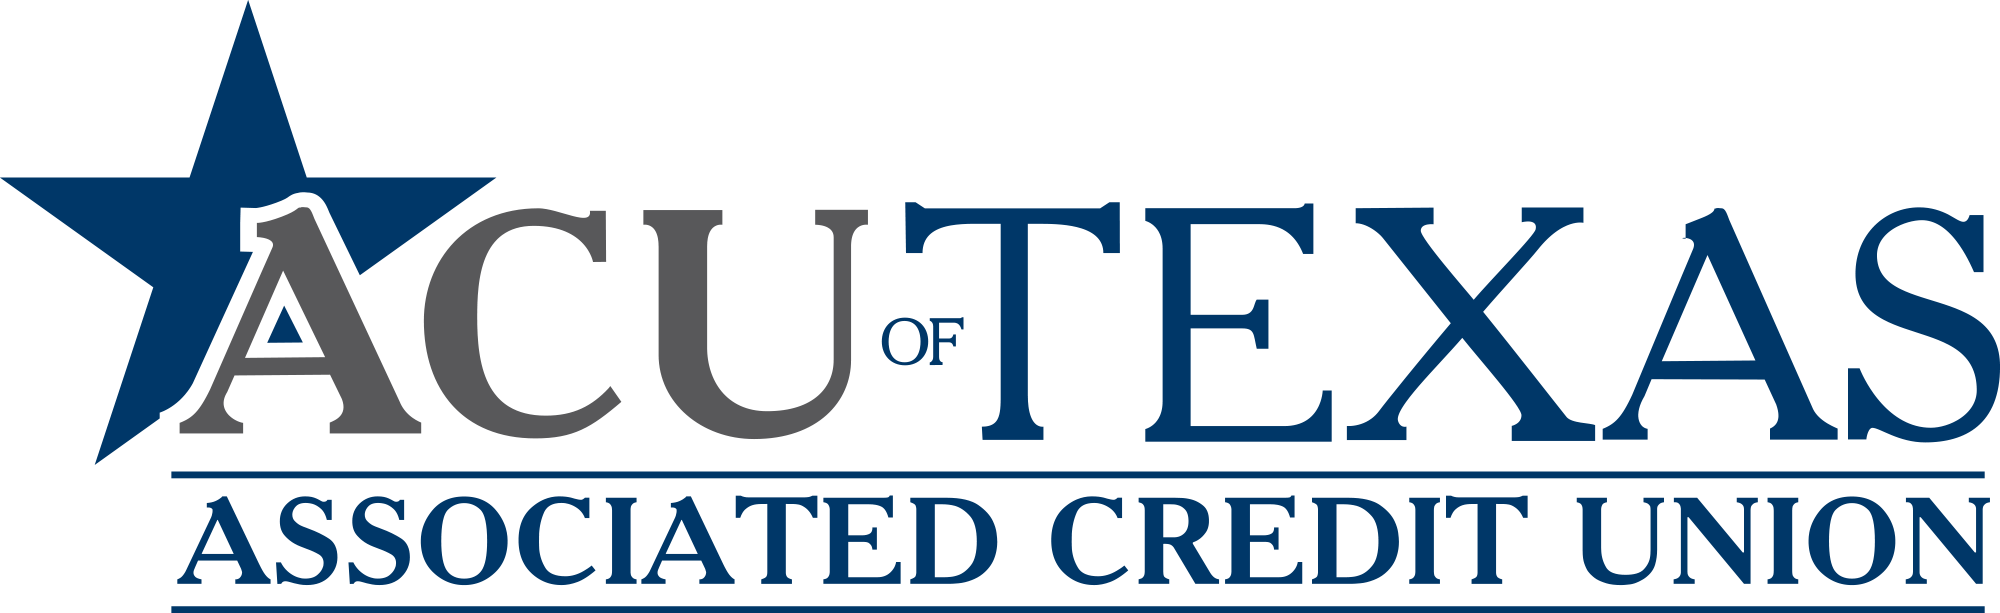 Associated Credit Union of Texas Logo